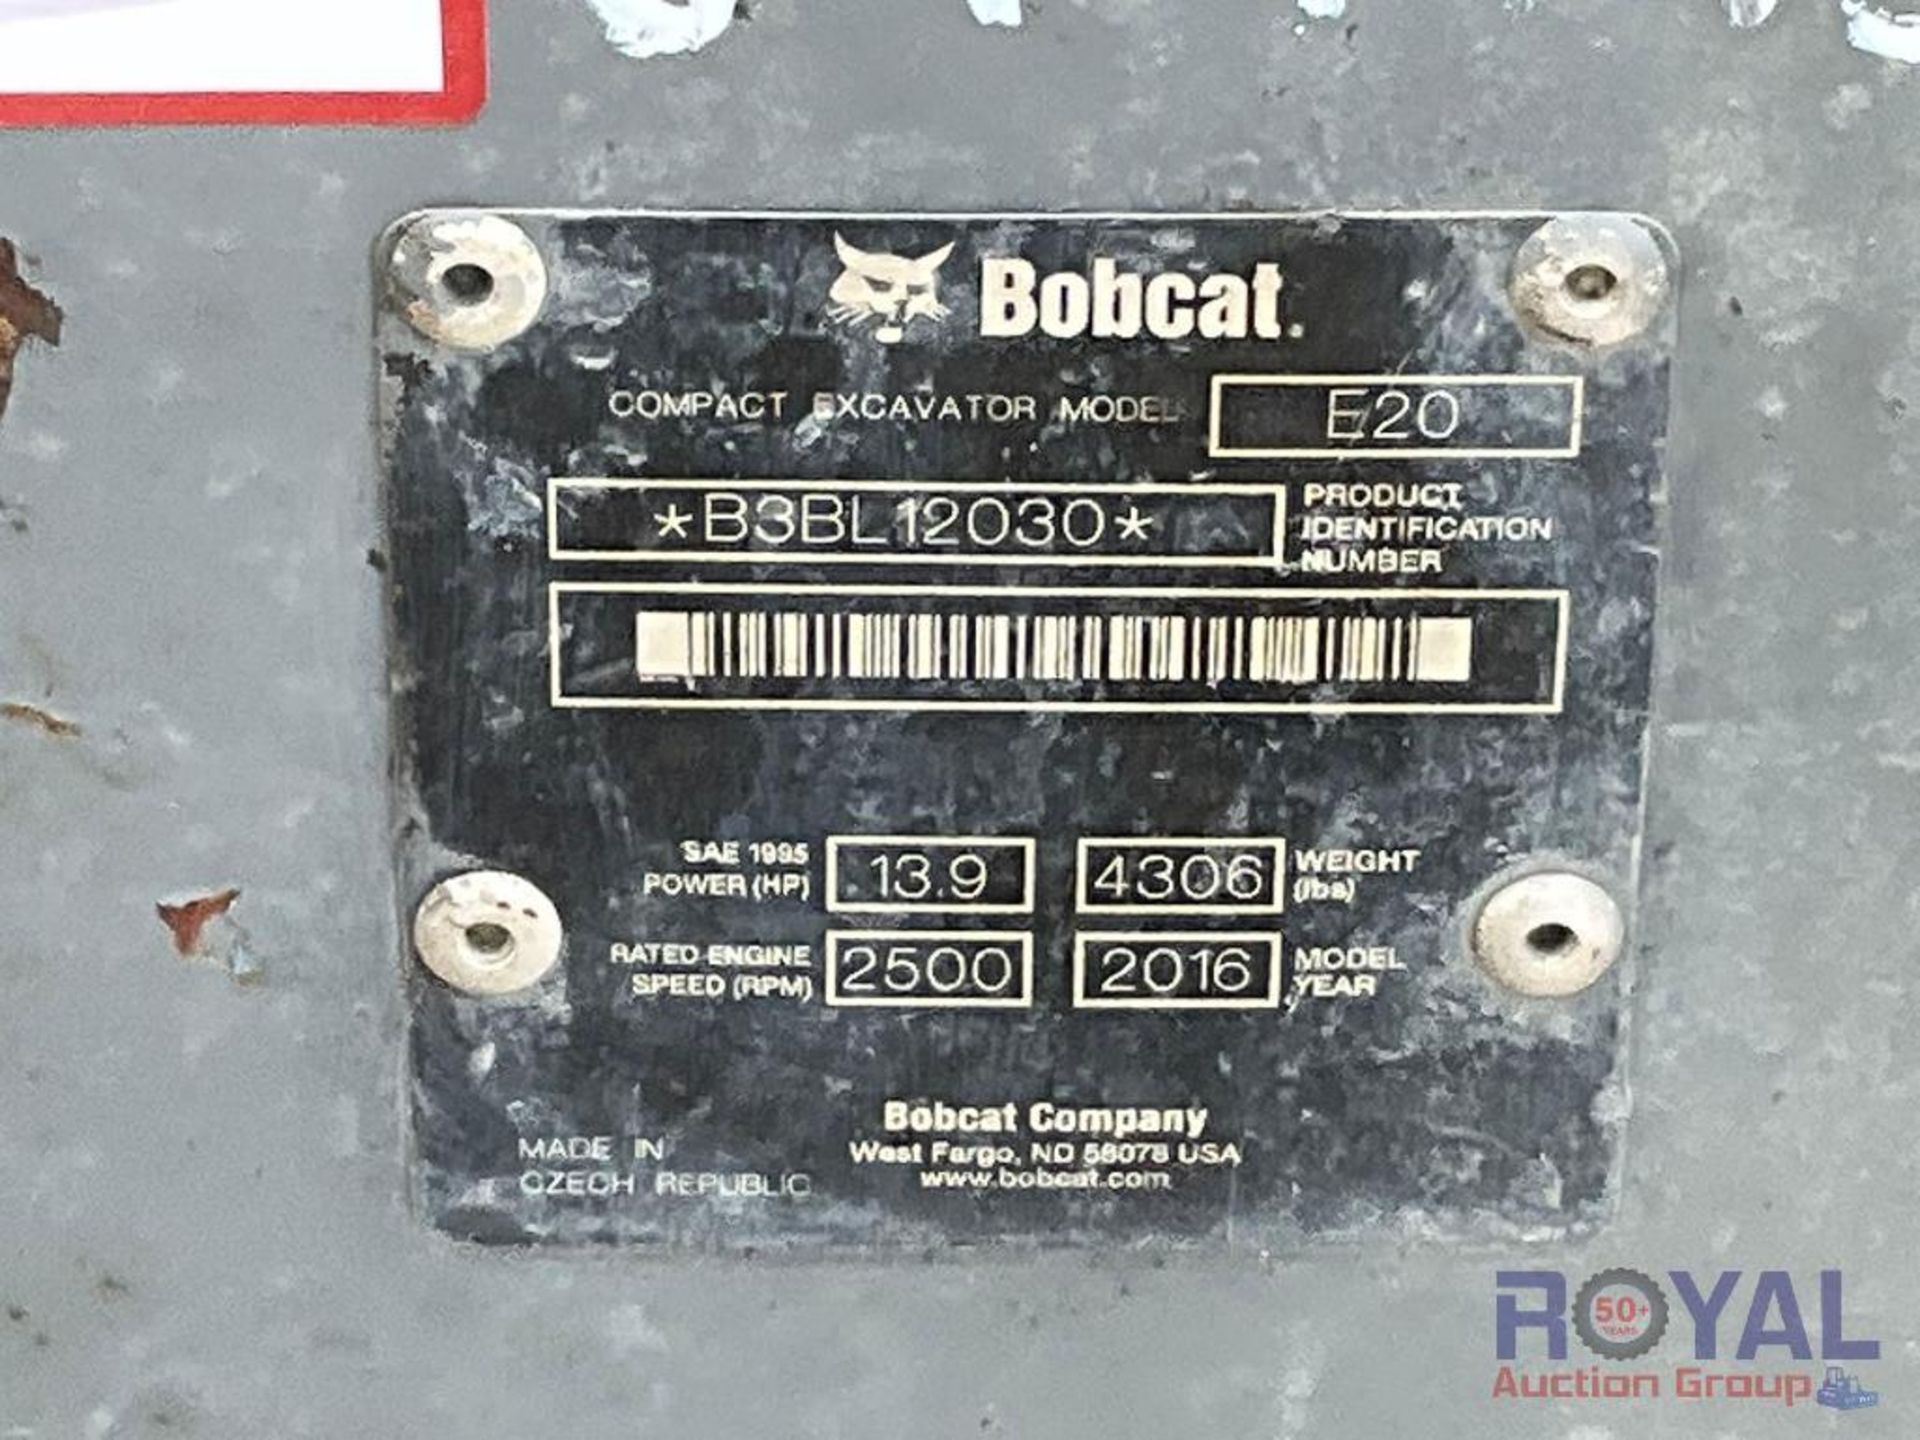 2016 Bobcat E 20 Mini Hydraulic Excavator - Image 5 of 24